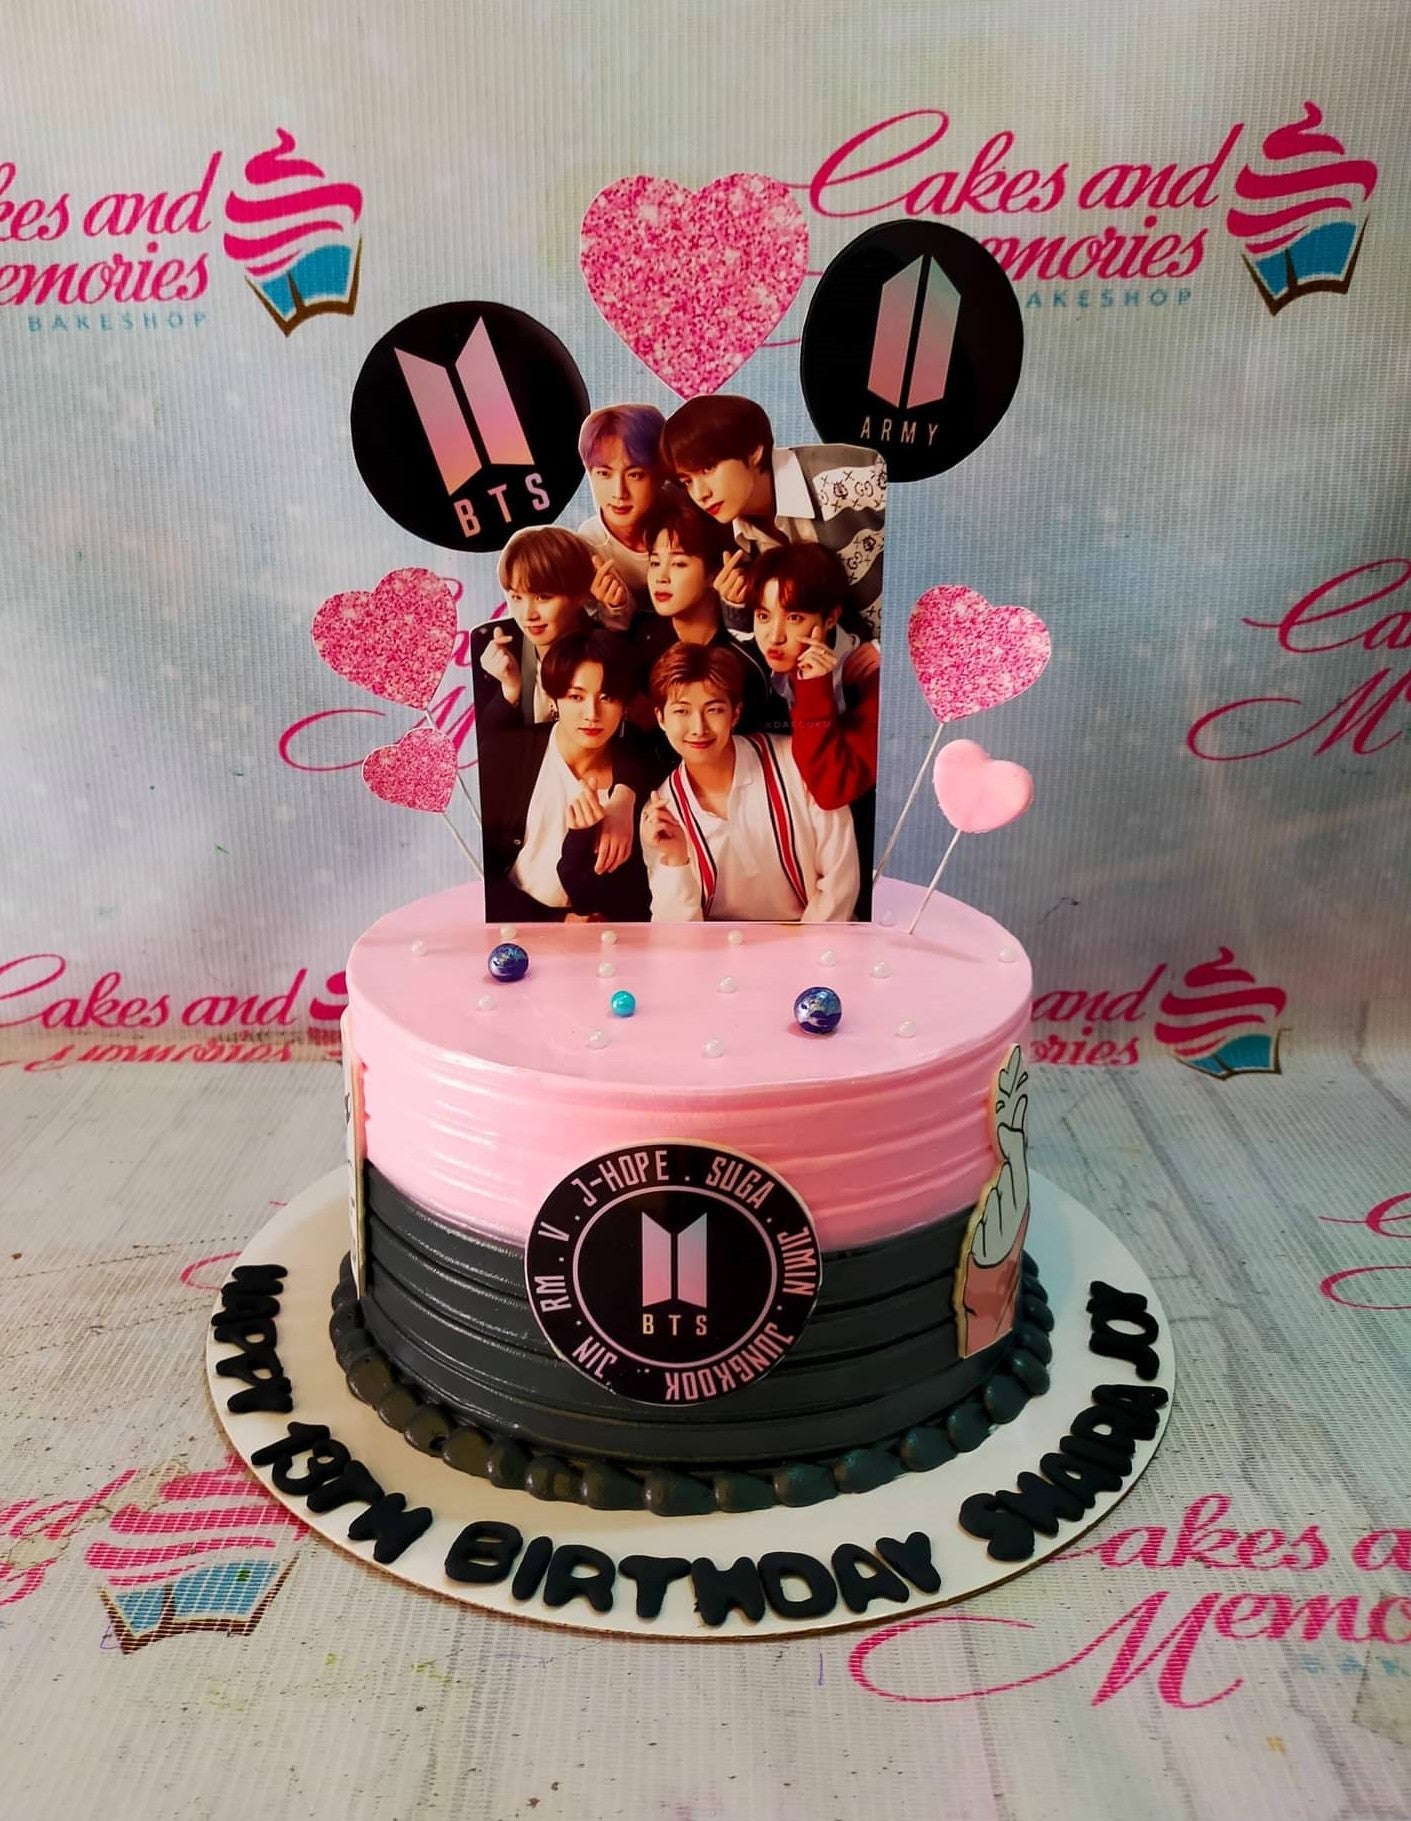 BTS Sam Kpop Cake, A Customize Kpop cake